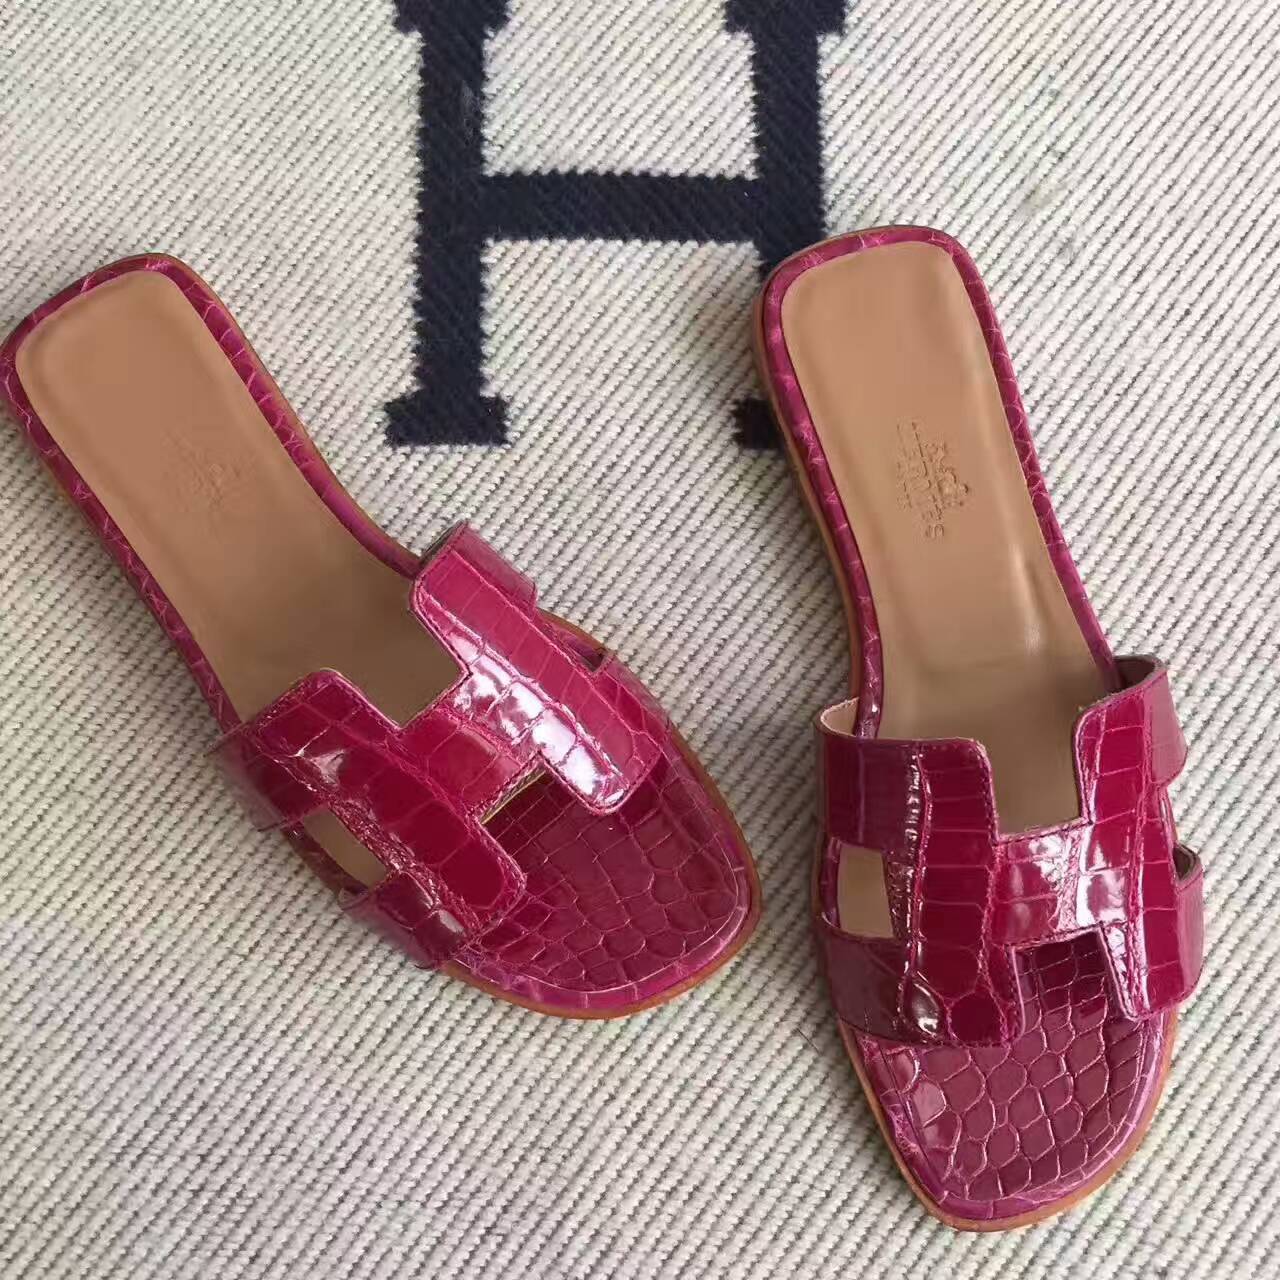 crocodile brand sandals